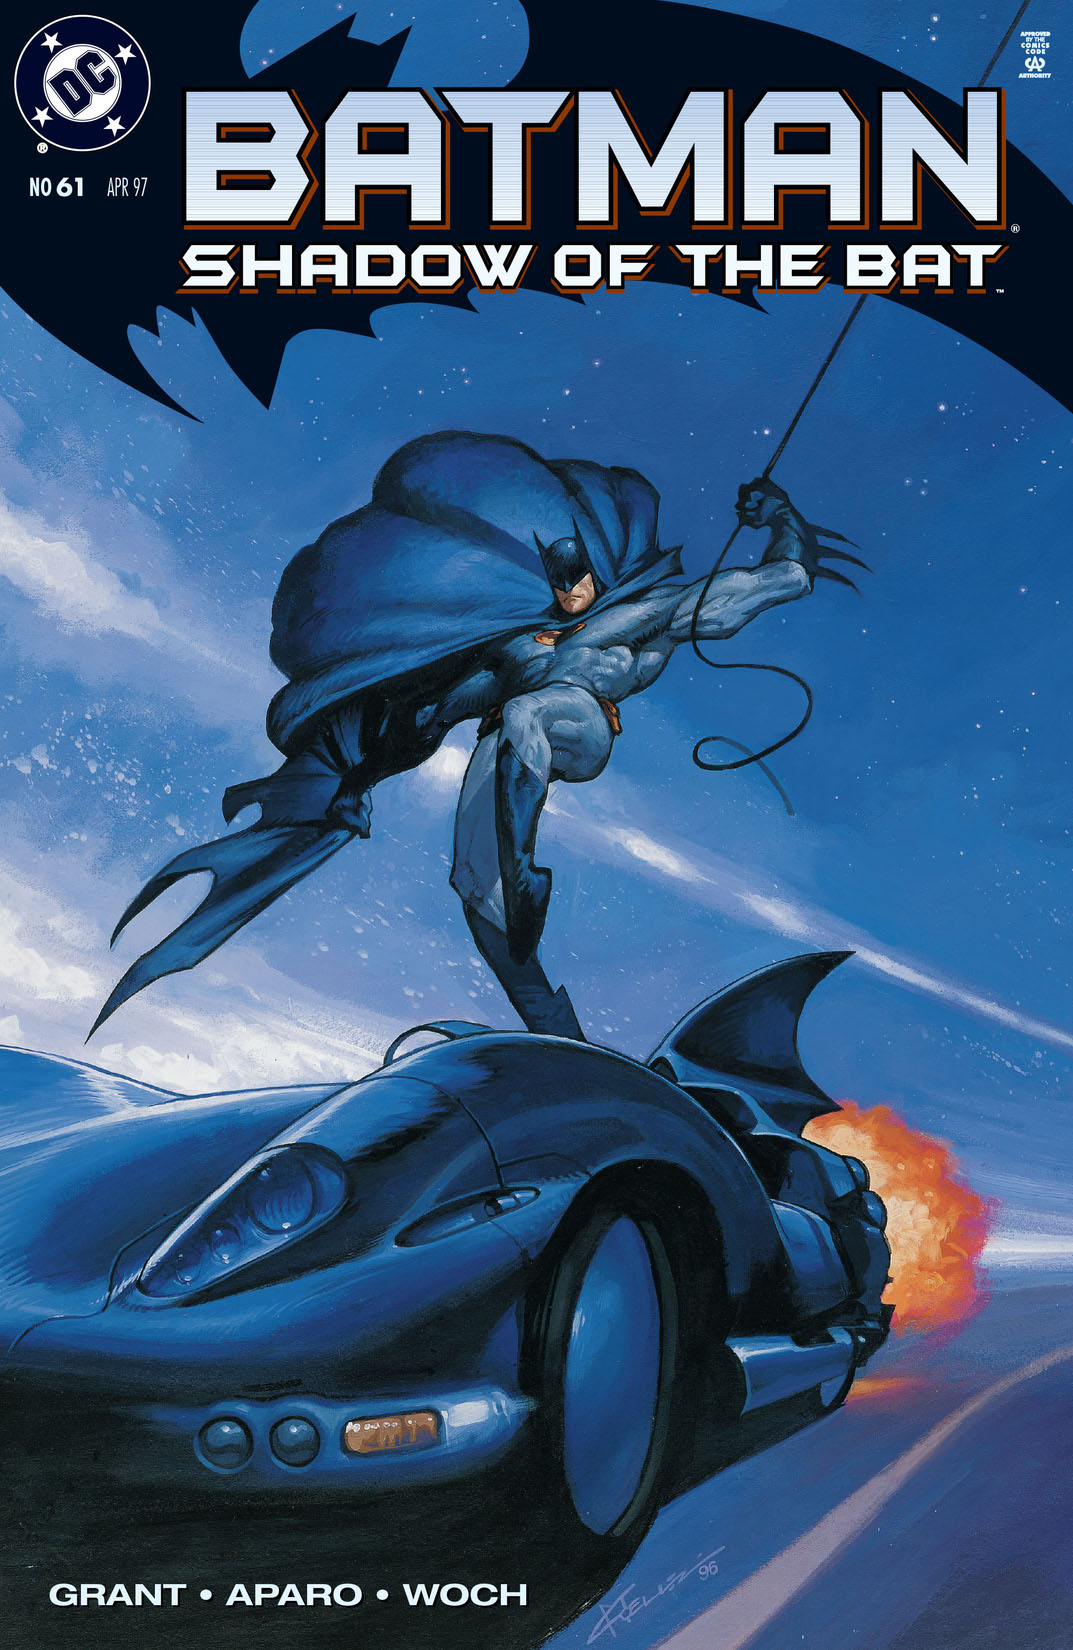 Batman: Shadow of the Bat #61 preview images